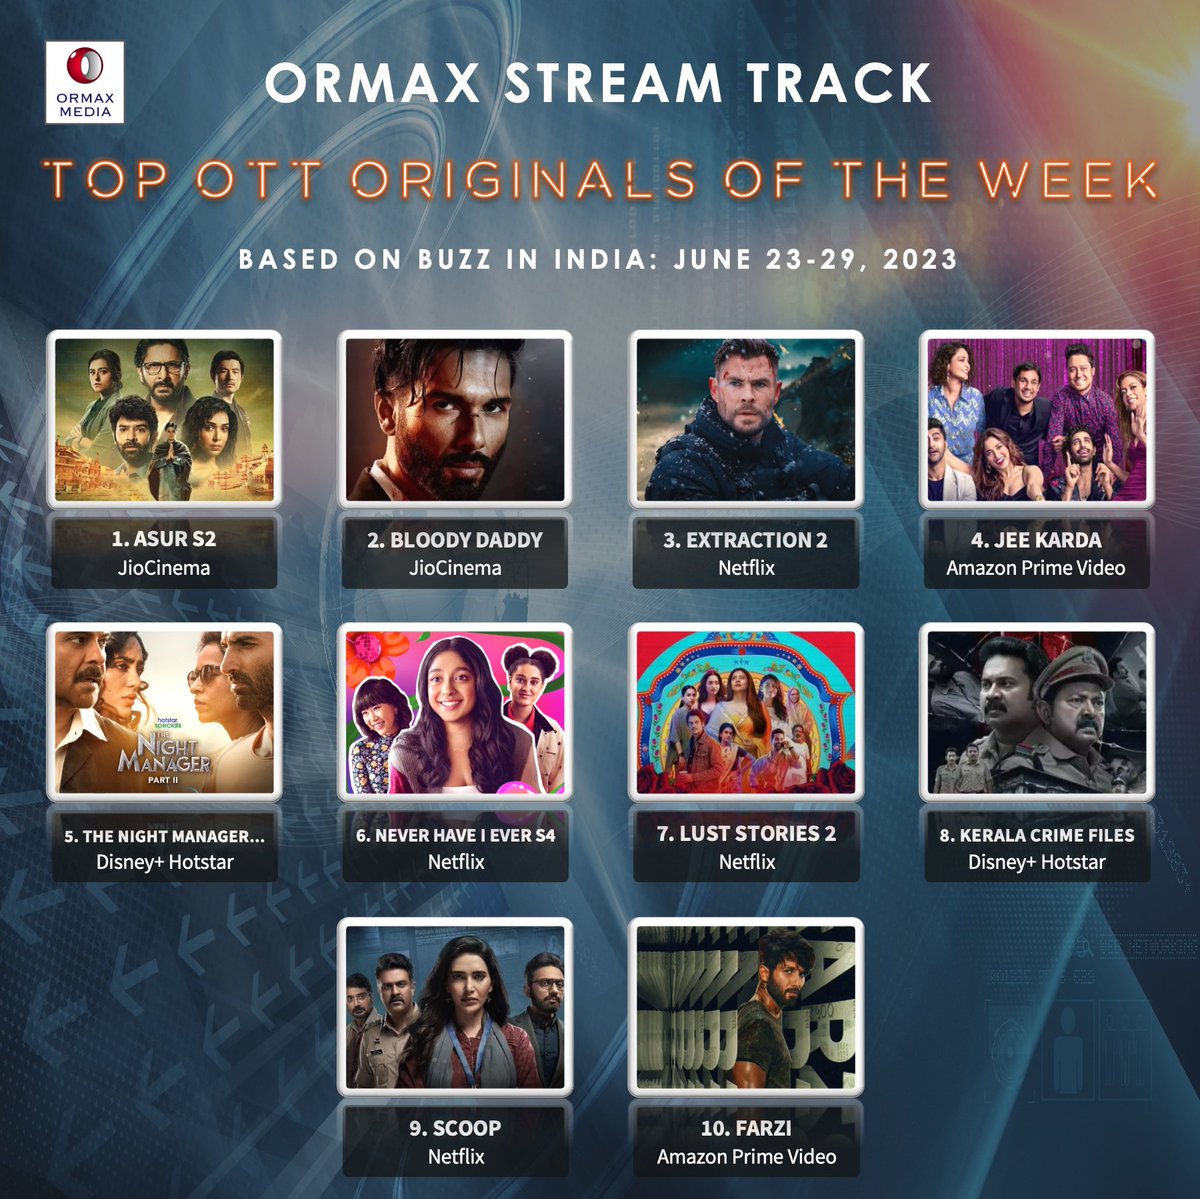 Ormax Stream Track: Top 10 OTT originals in India, including upcoming shows/ films, based on Buzz (Jun 23-29) #OrmaxStreamTrack #OTT